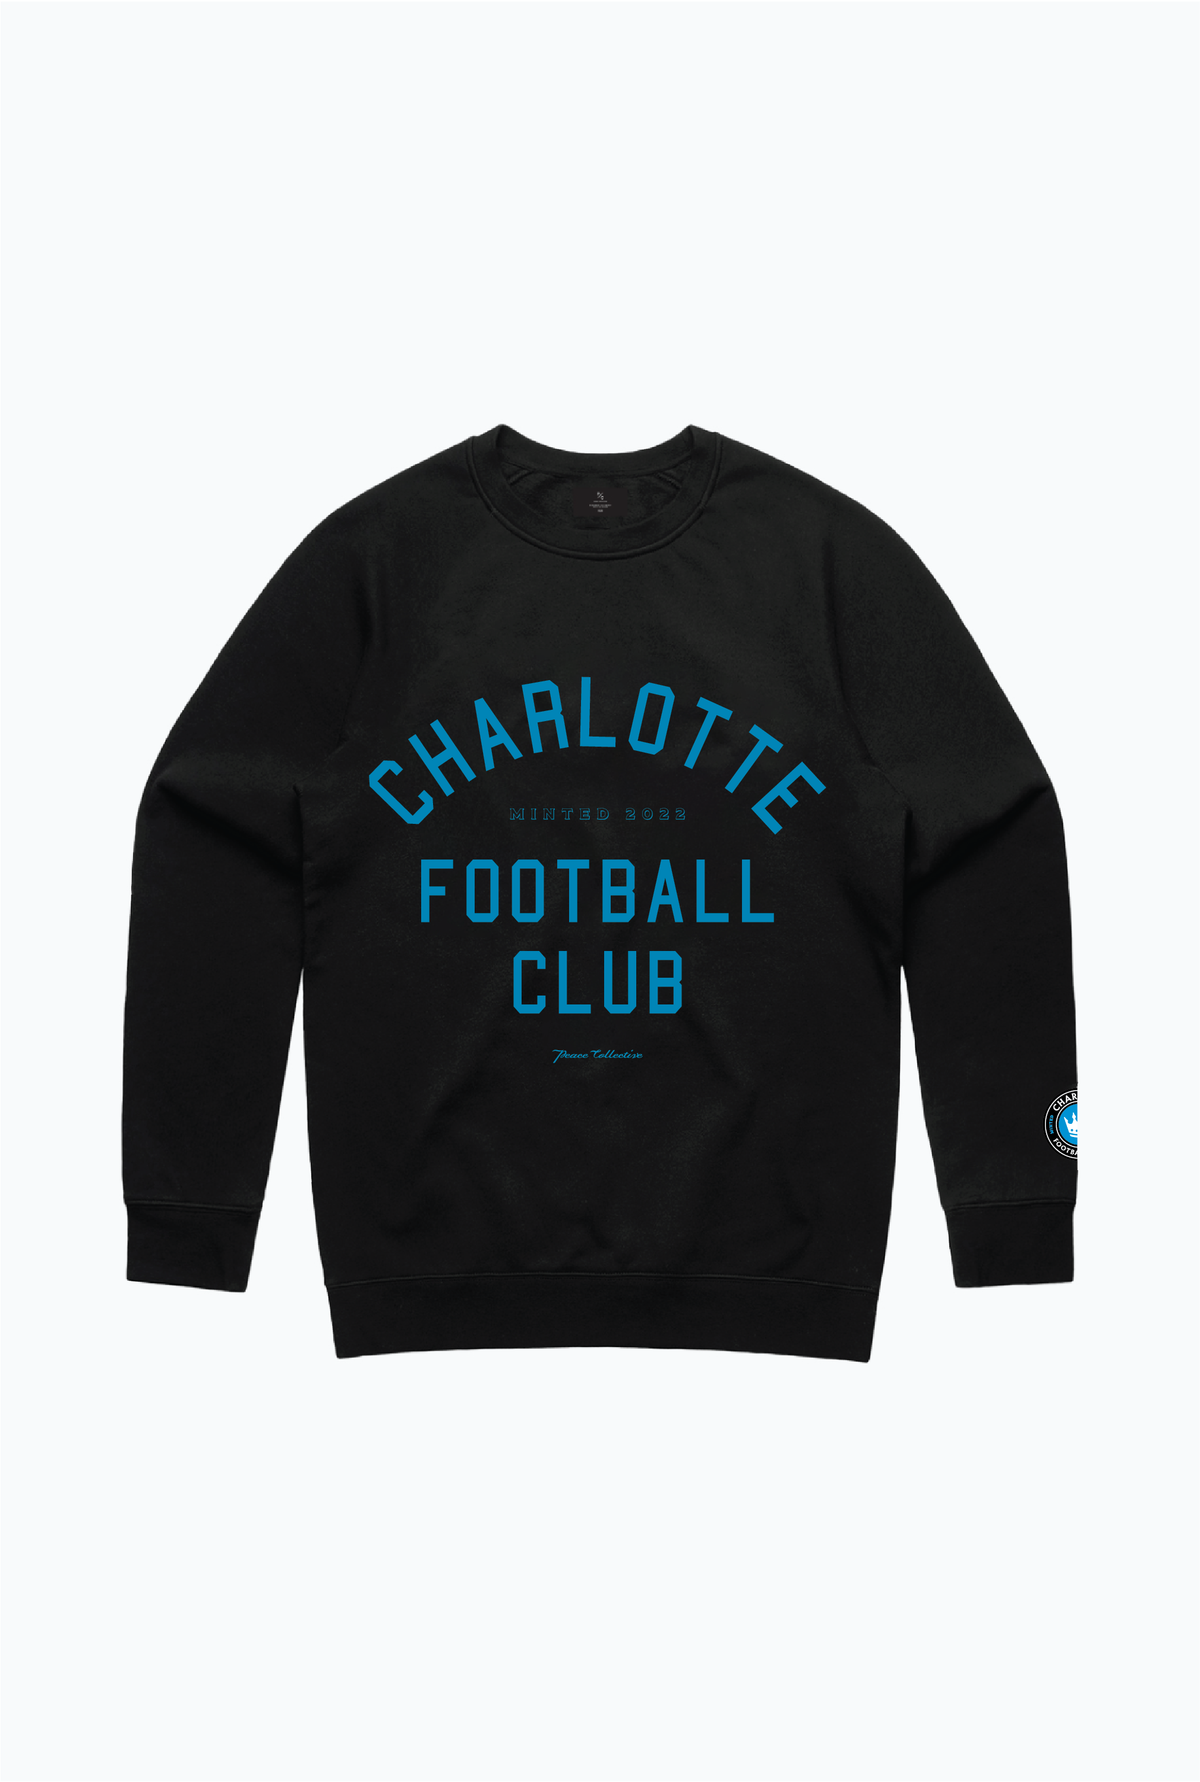 Charlotte FC Essentials Heavyweight Crewneck - Black